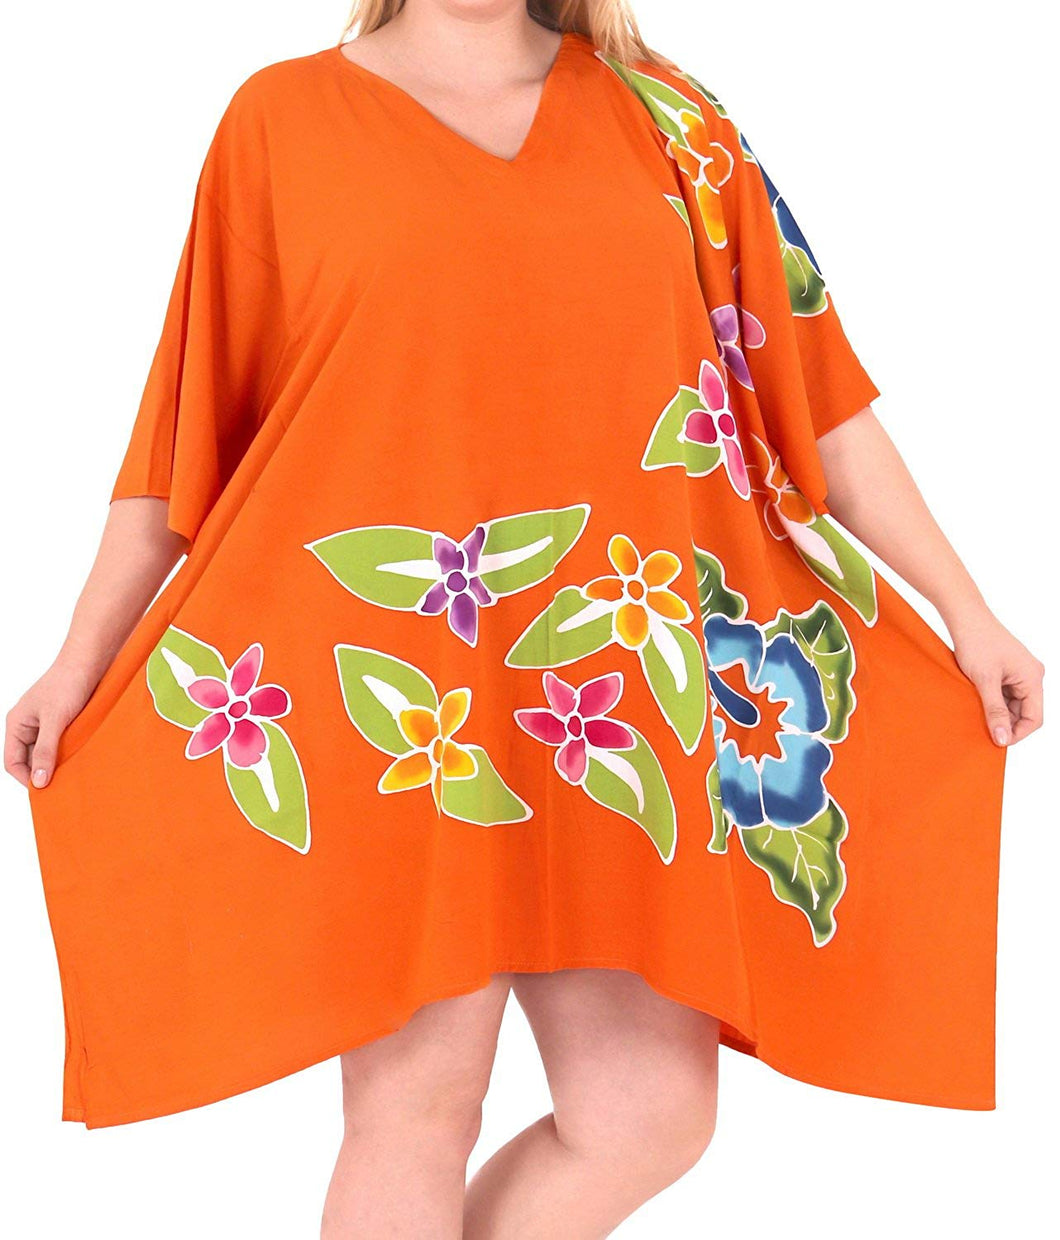 Women's Designer Sundress Beachwear Plus Evening Casual Cover ups Dress Orange